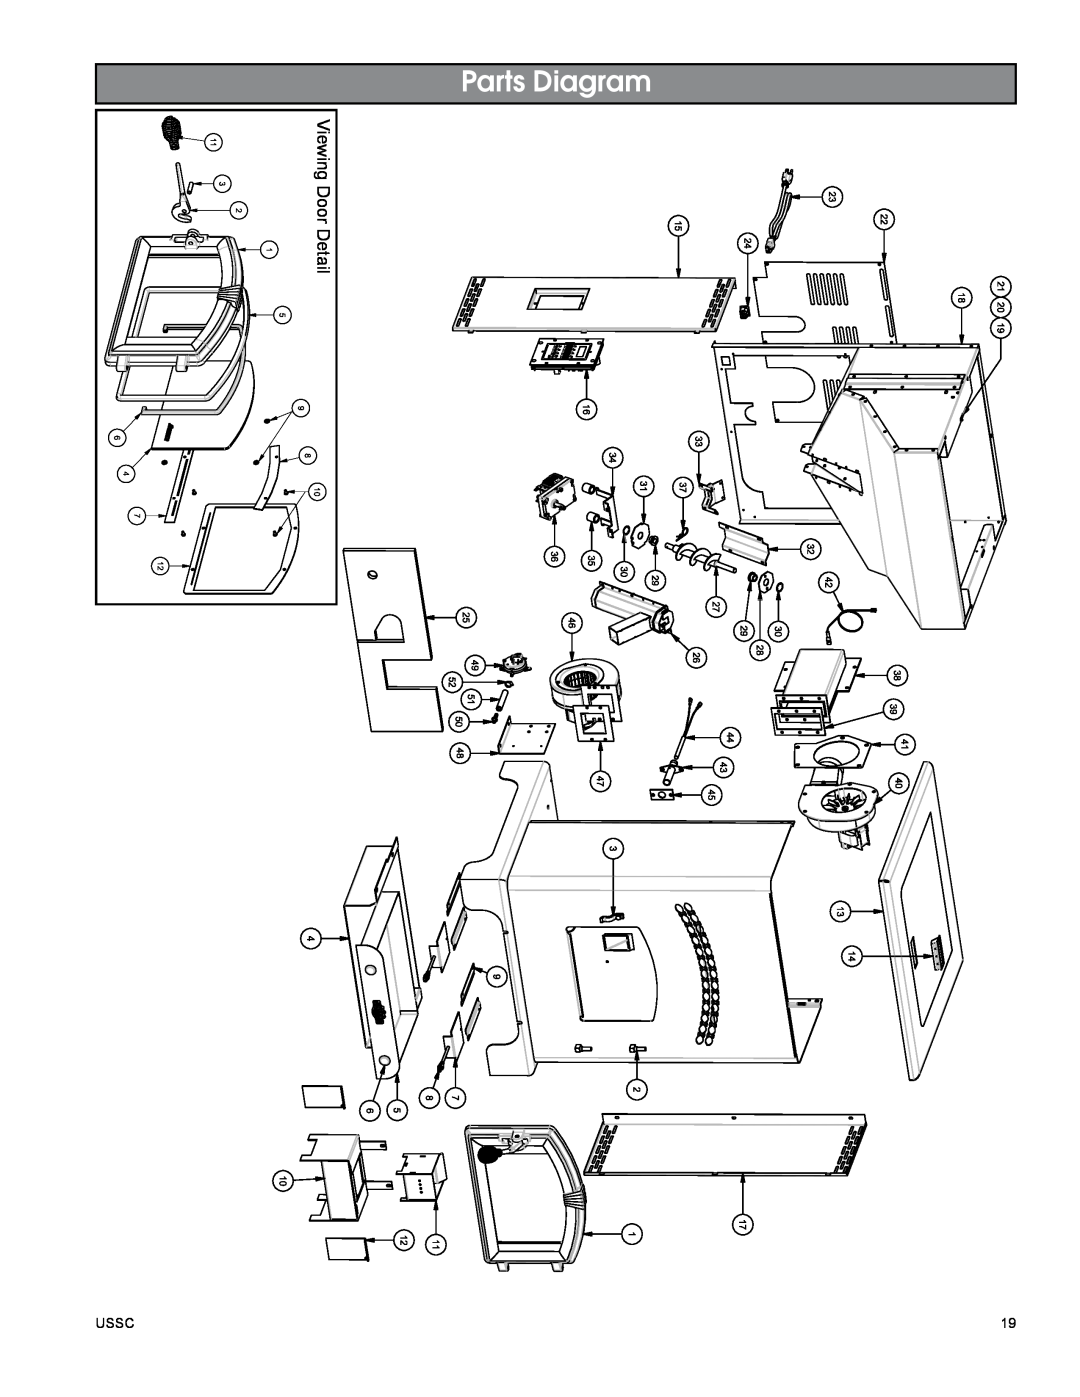 United States Stove 5510 owner manual Parts Diagram, Viewing Door Detail 